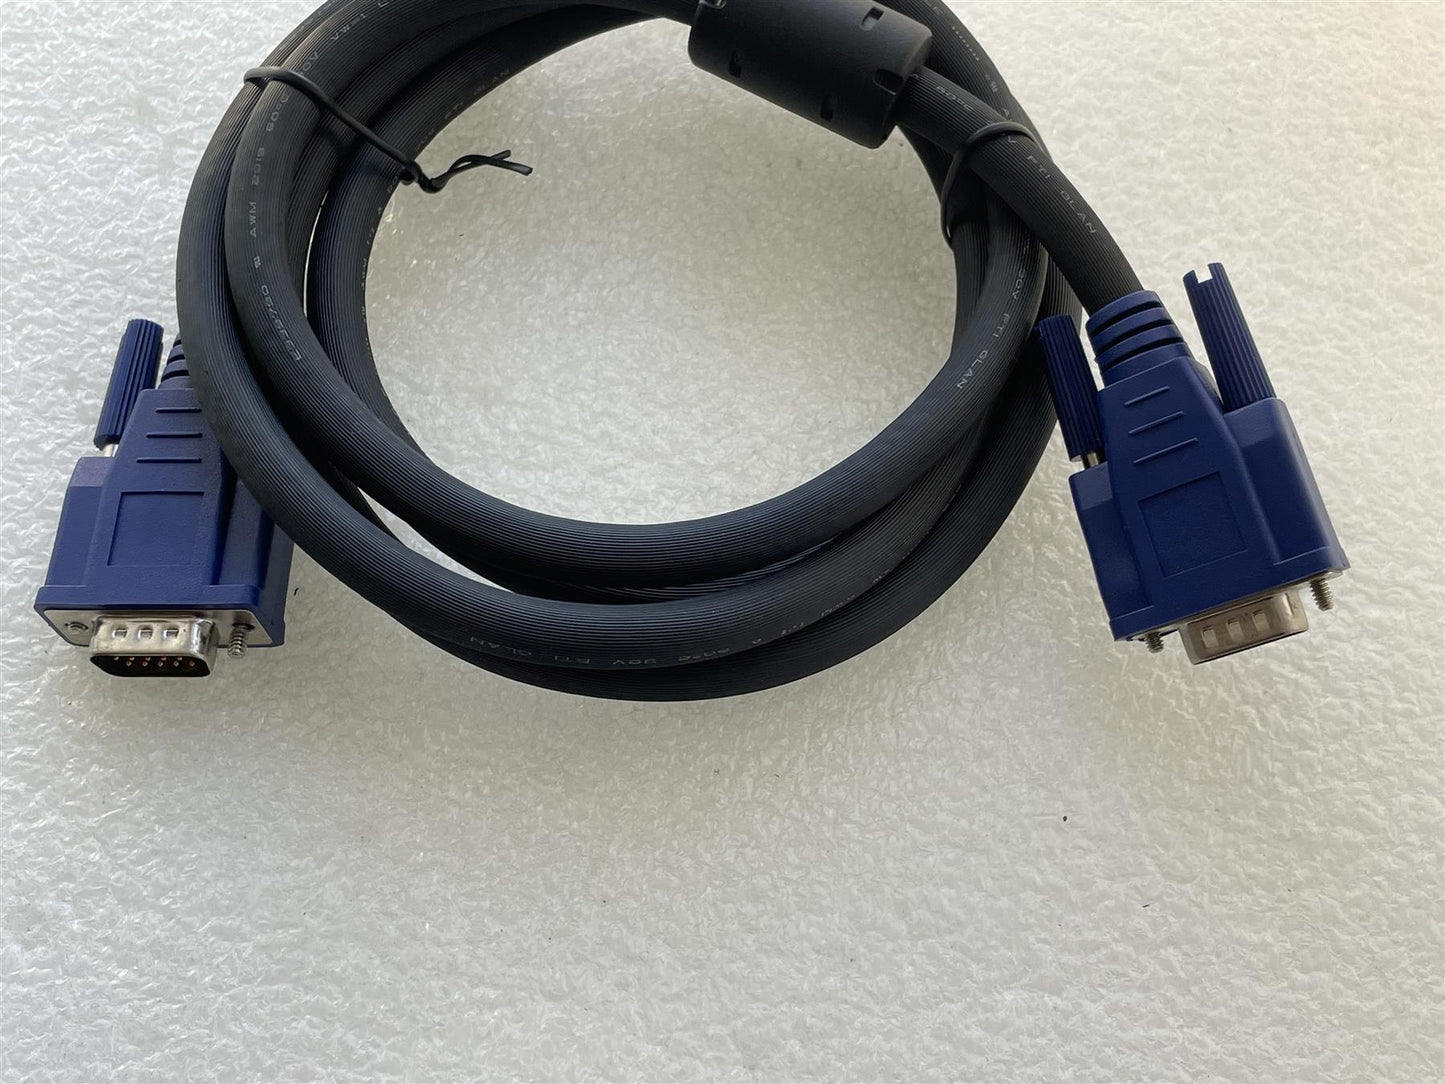 50 X 464265-001 Original VGA Cable Male to Male 1.8M PC CCTV PROJECTOR TV NEW